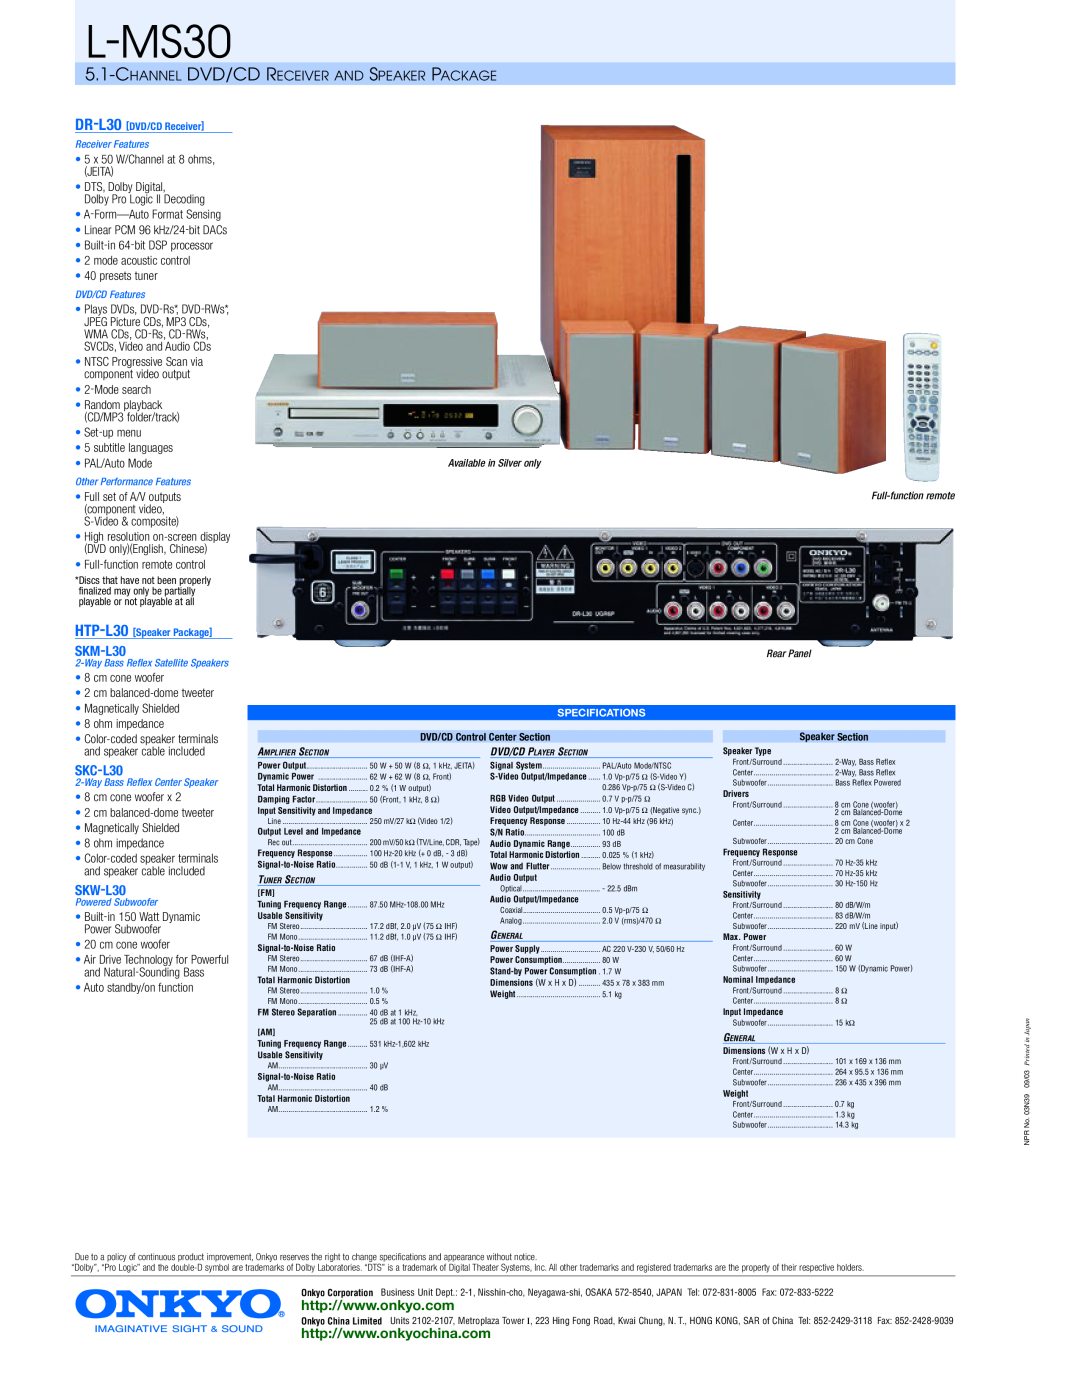 Onkyo L - MS30 manual L-MS30, SKM-L30, SKC-L30, SKW-L30, Channel Dvd/Cd Receiver And Speaker Package 